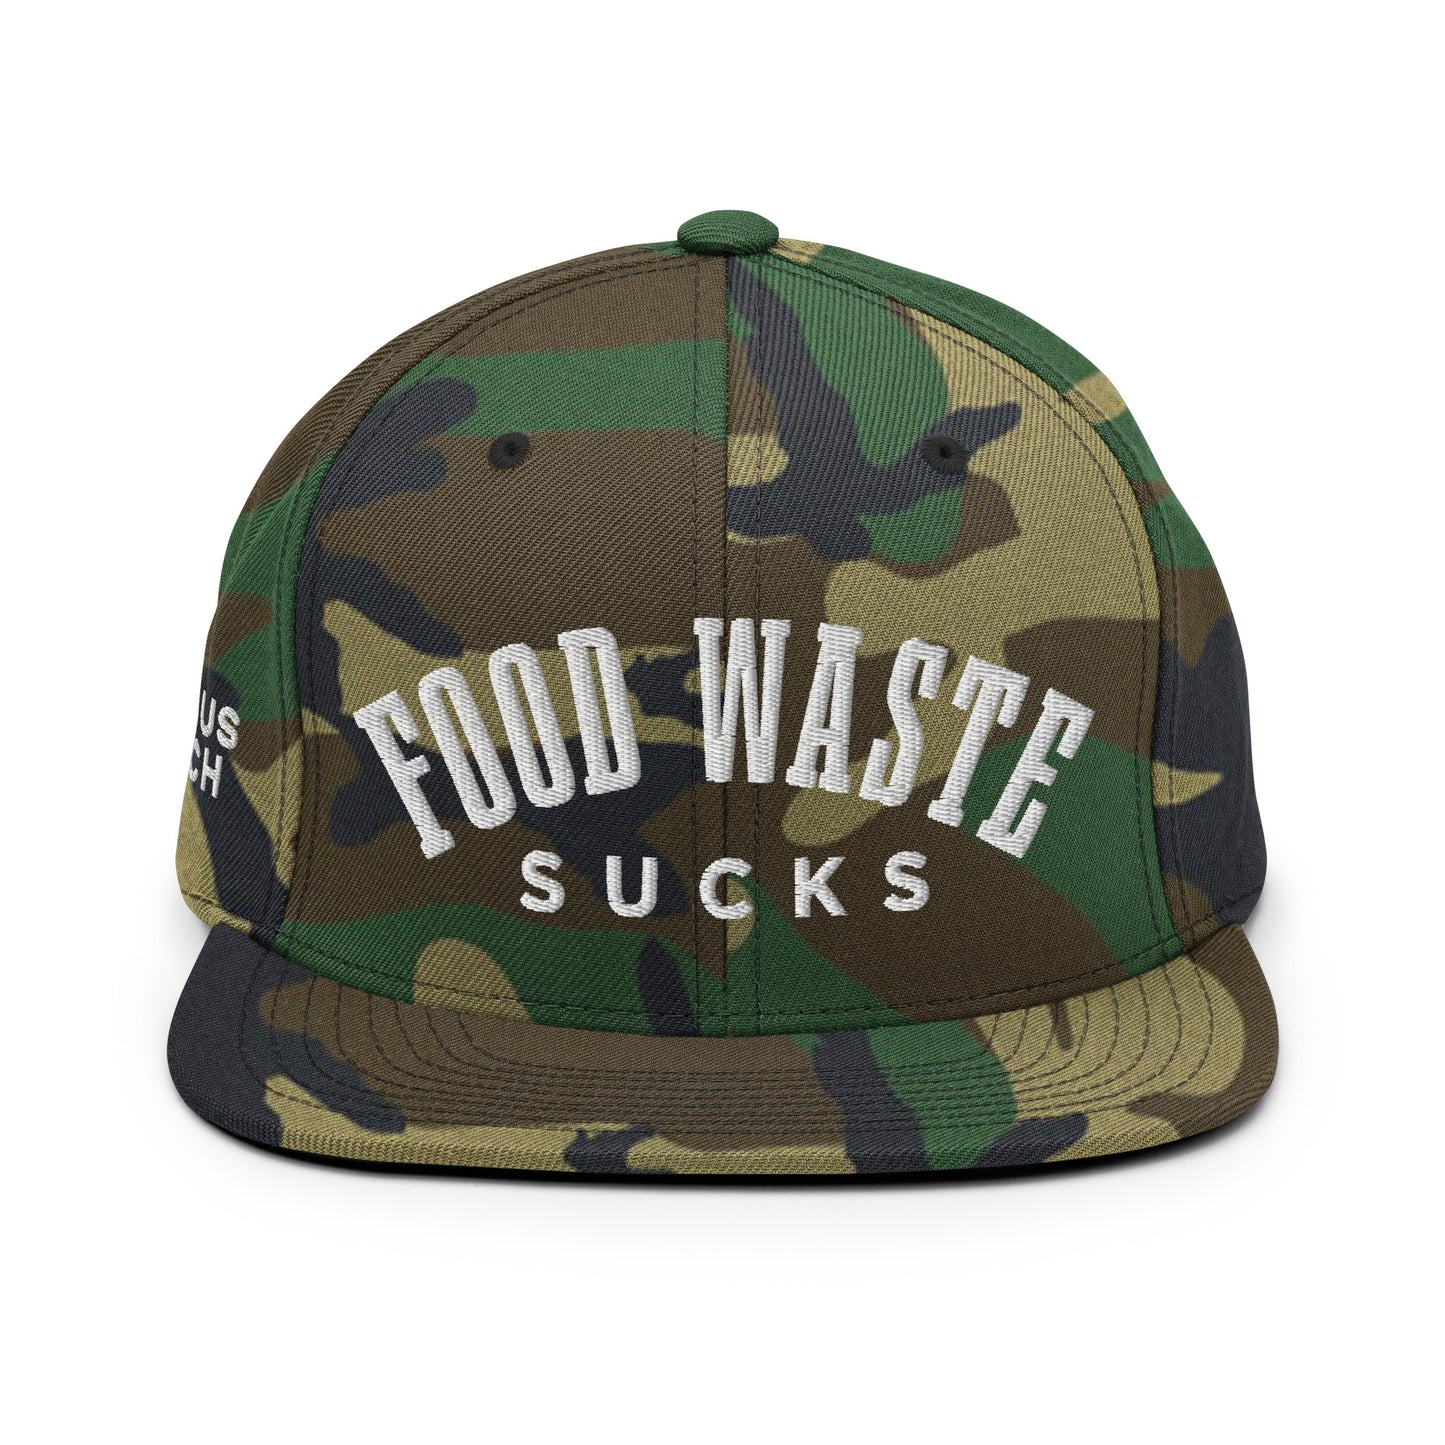 Food Waste Sucks Camo Snapback Hat